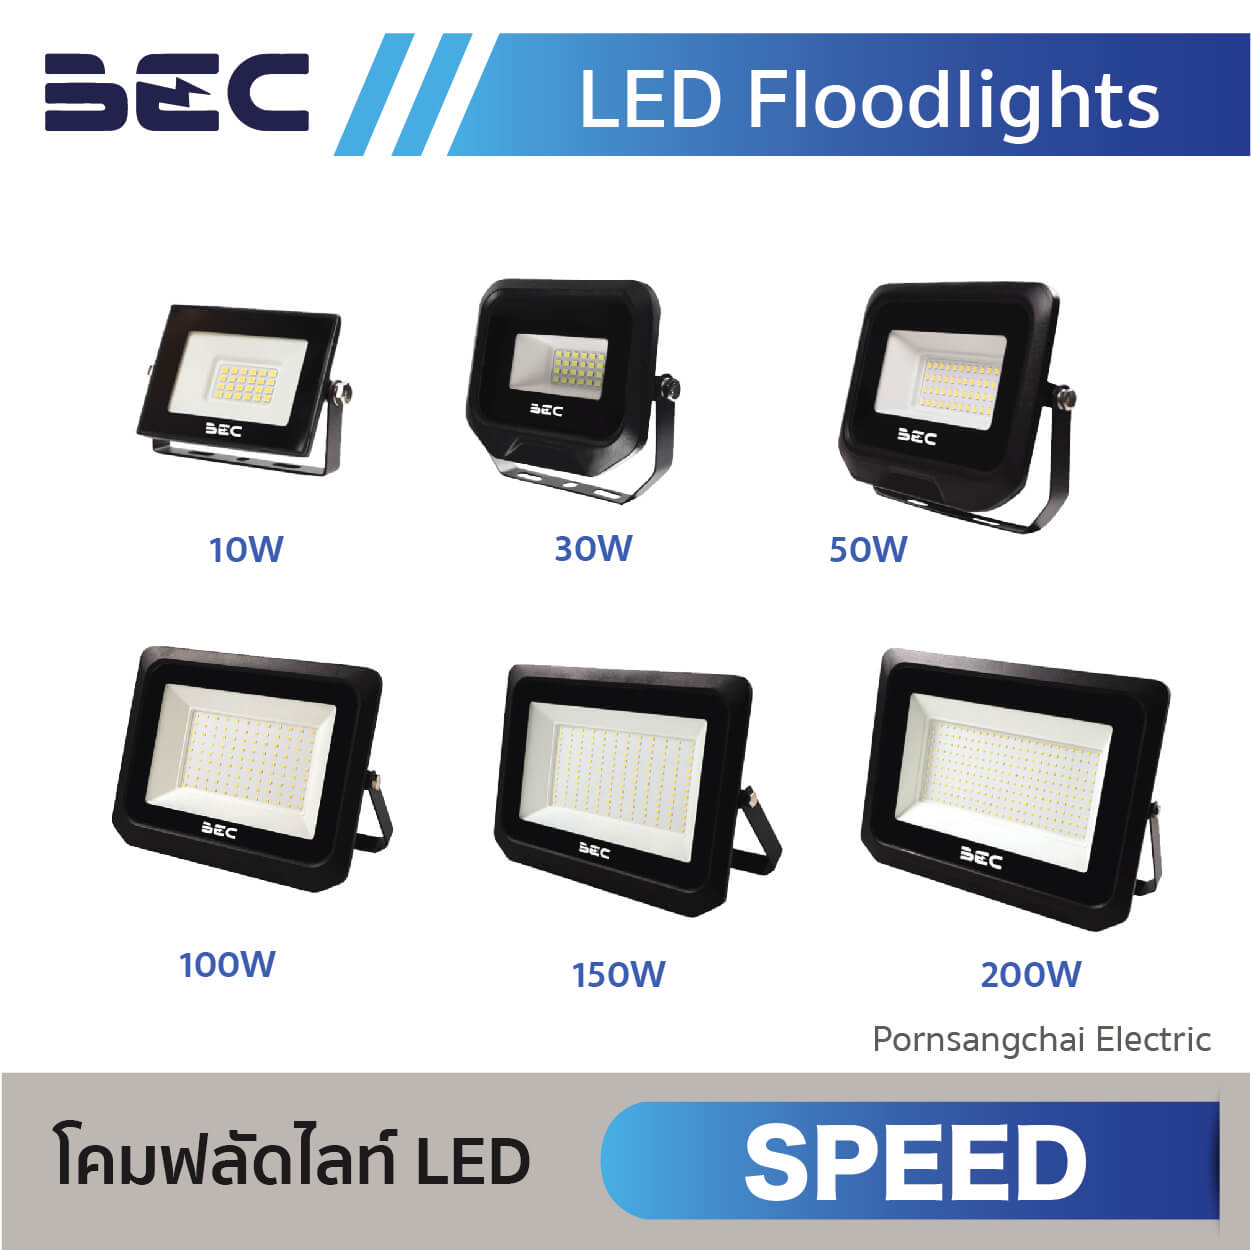 BEC โคมไฟฟลัดไลท์ LED รุ่น SPEED